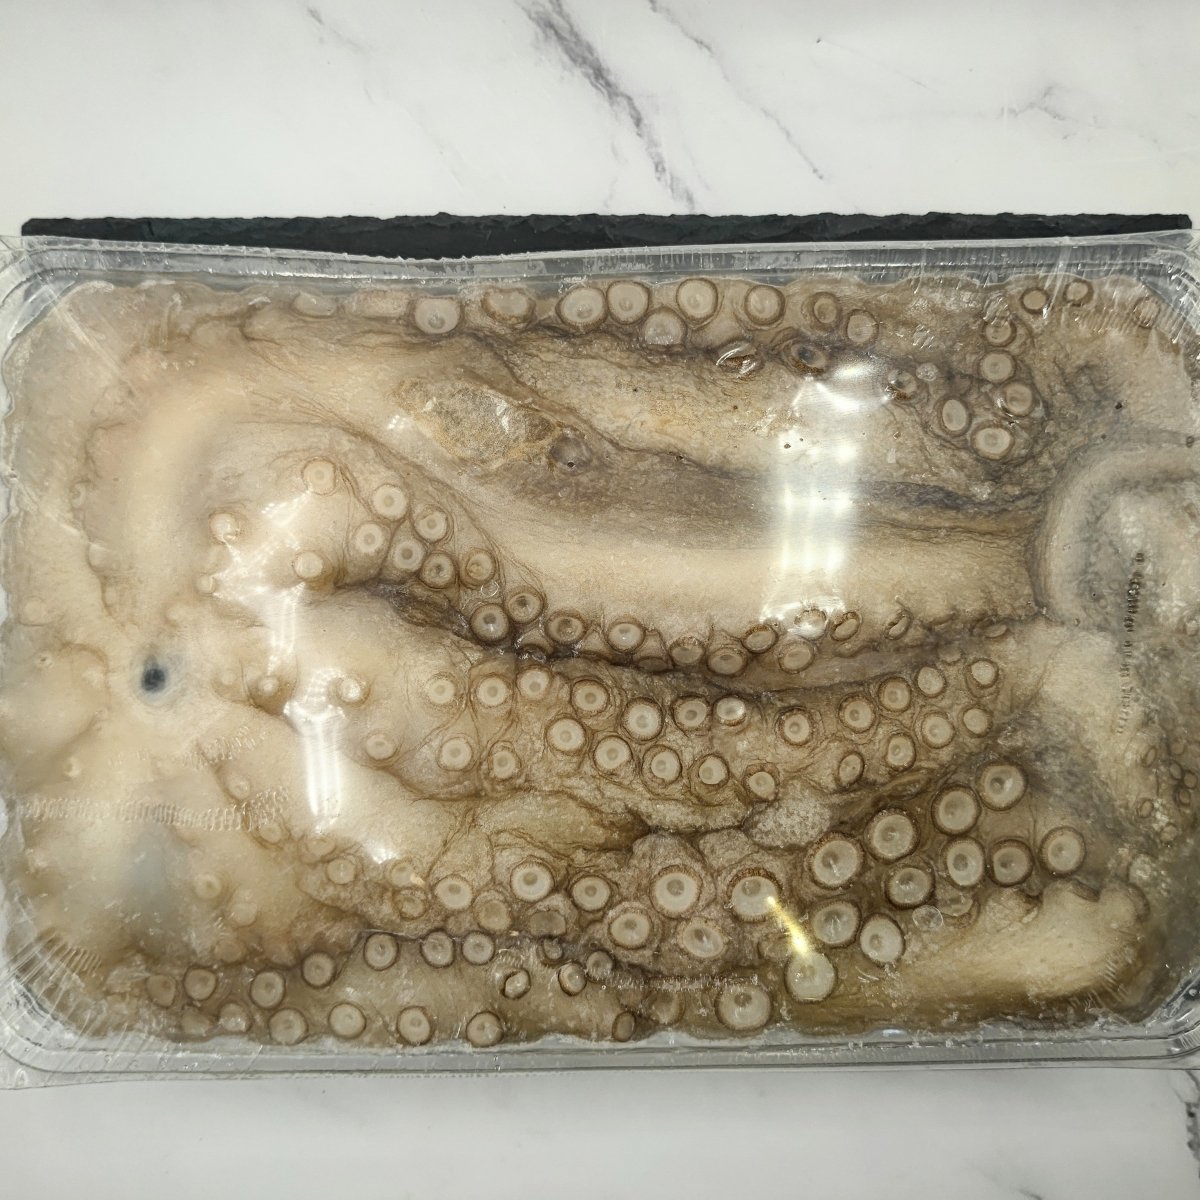 Octopus 1.2 - 2 Kilo - Seafood Direct UK